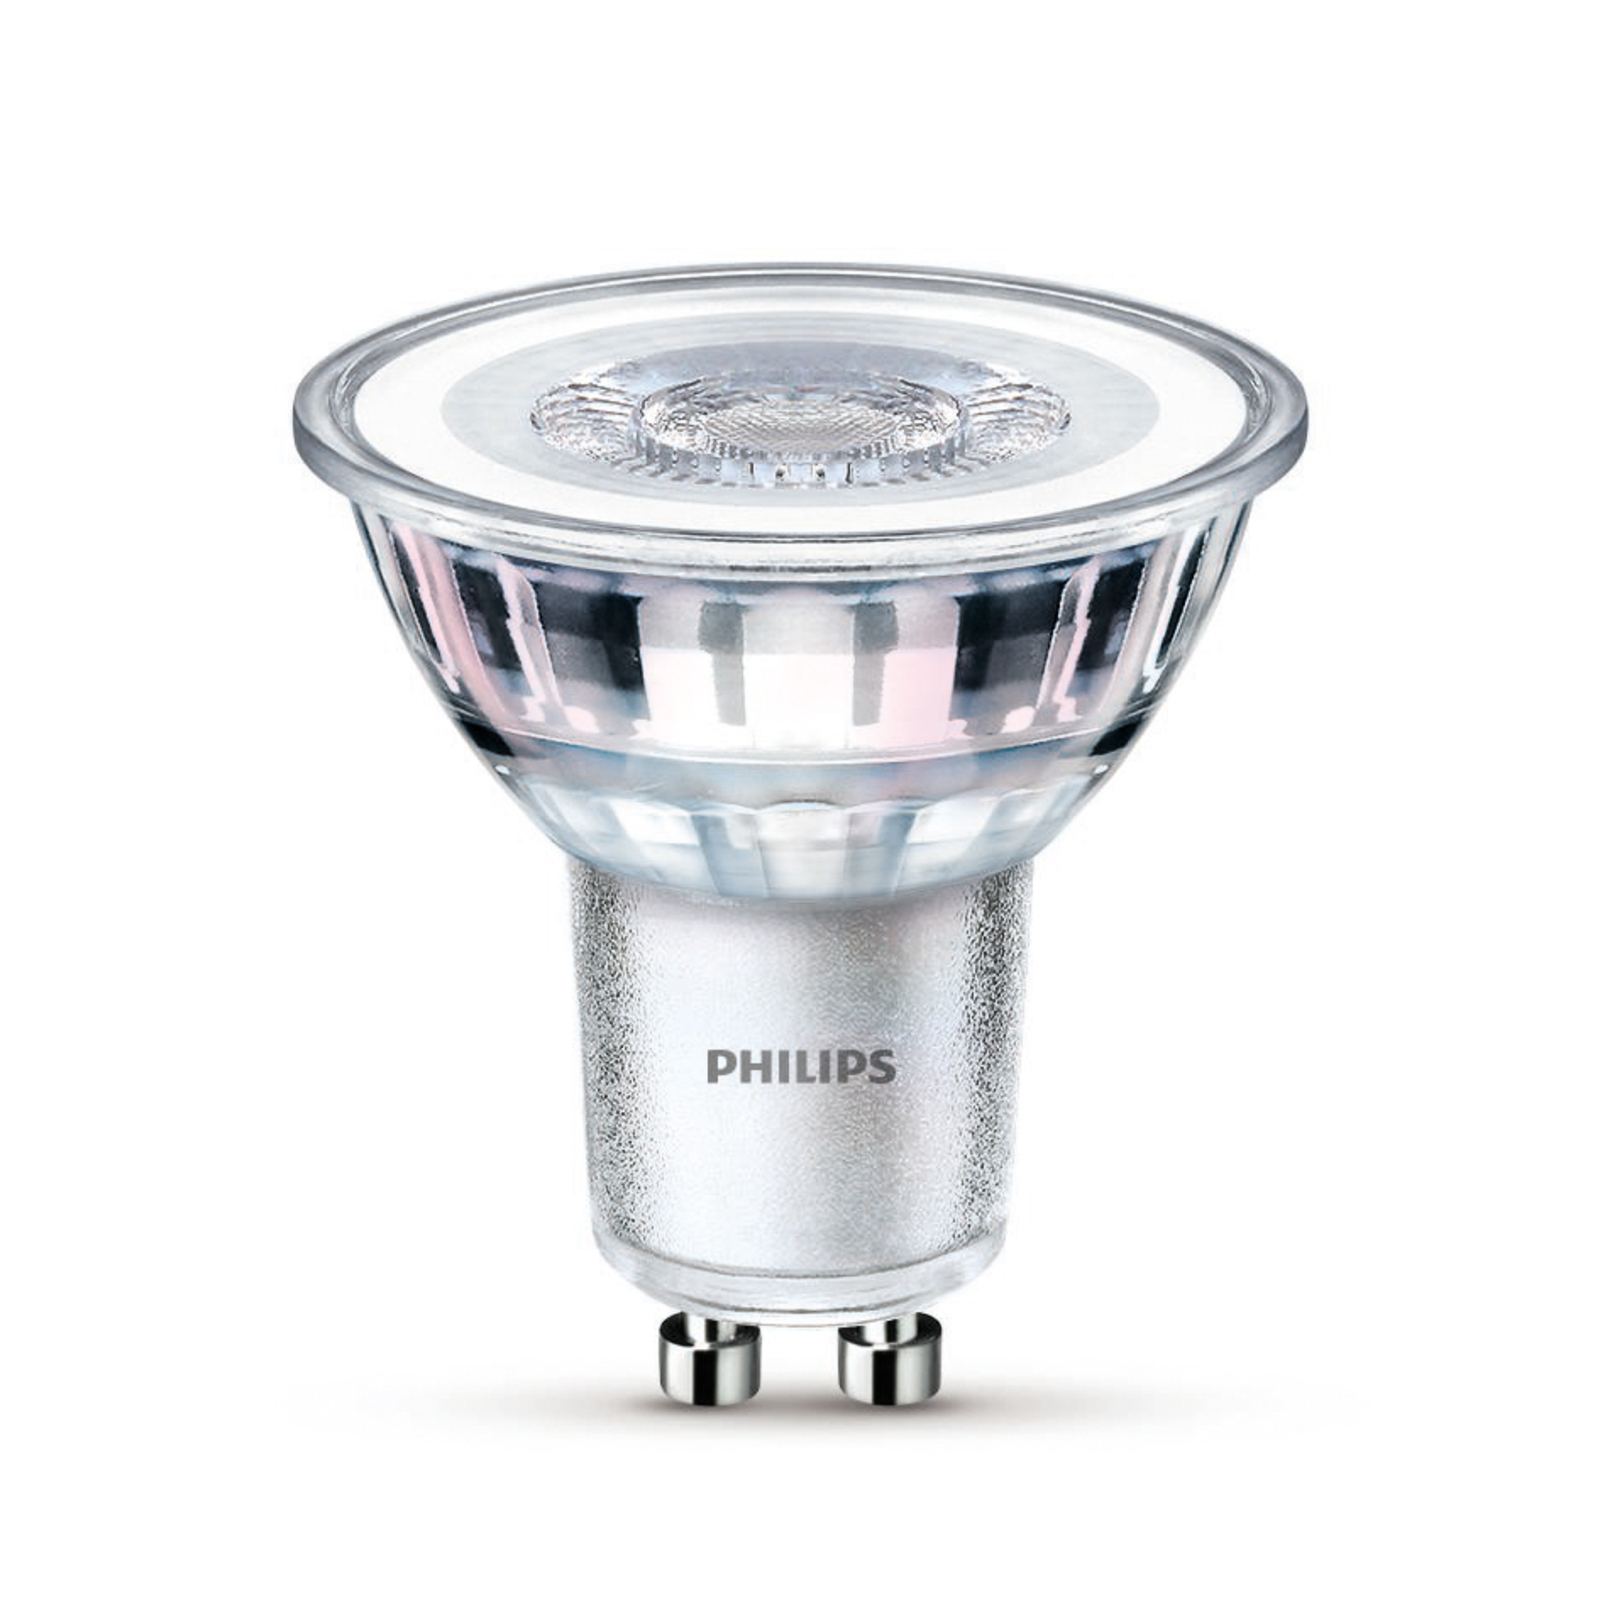 Philips 3,5W 275lm 840 transparente 36° 6 ud